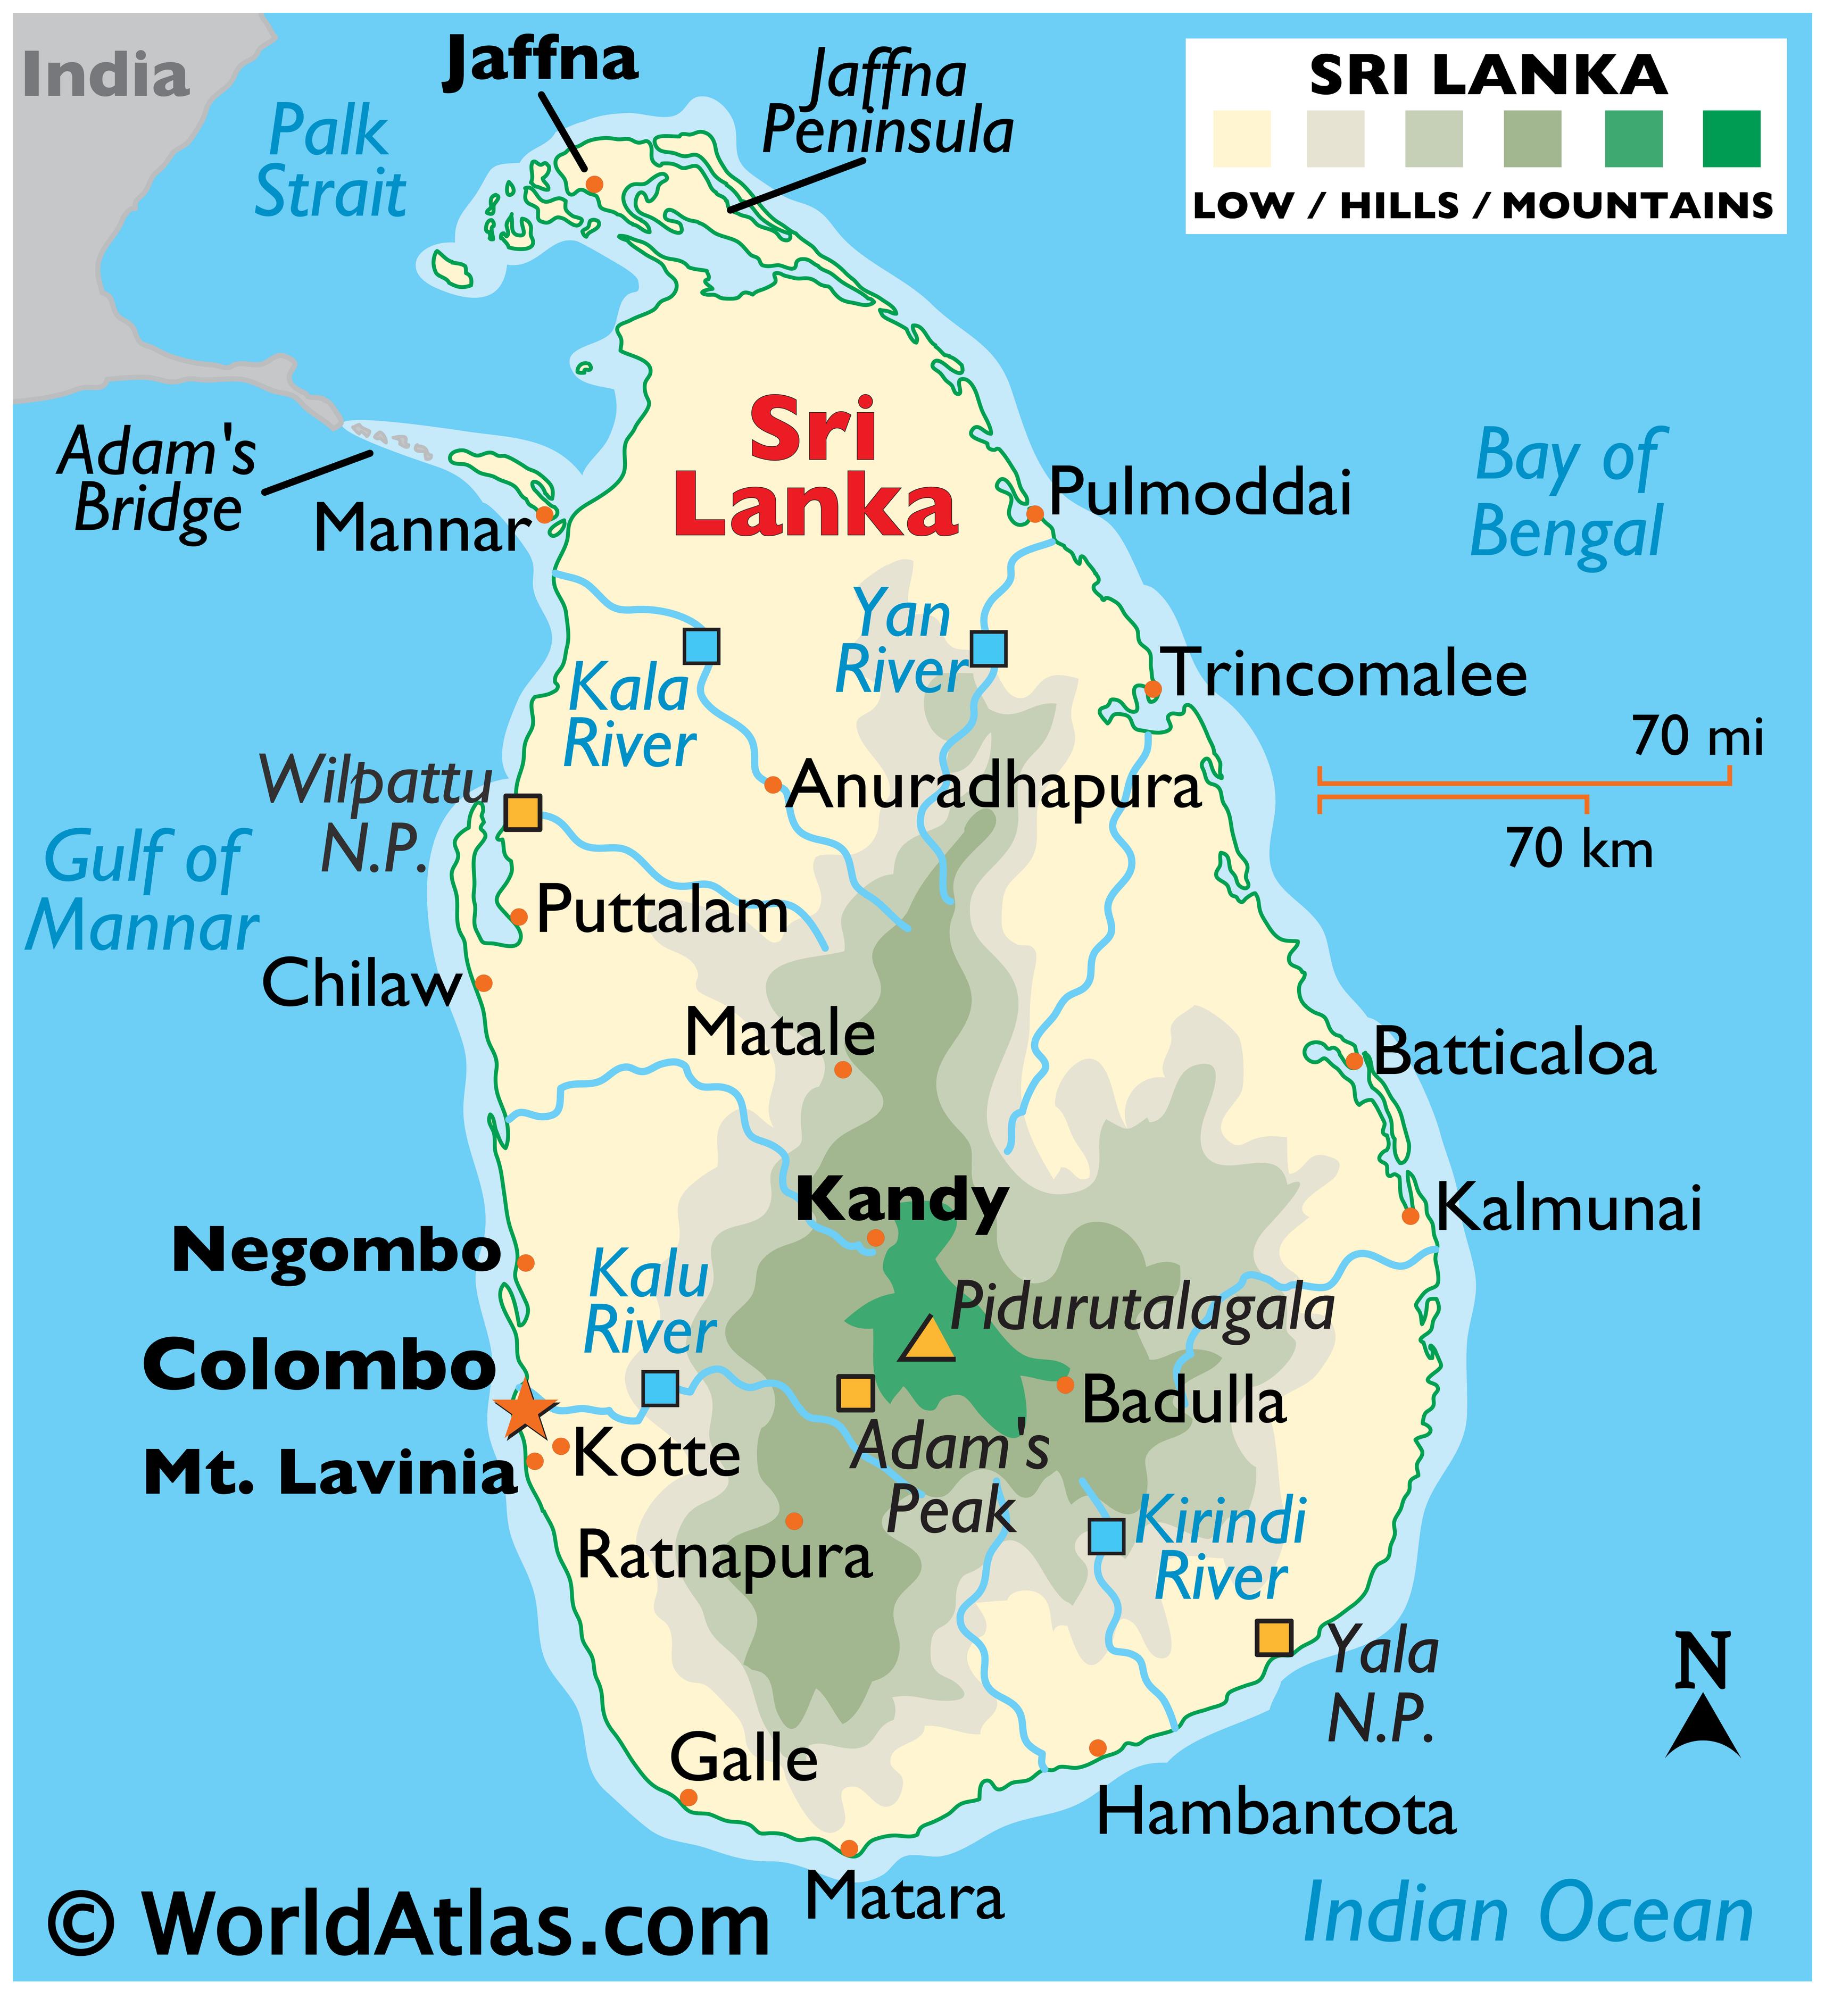 Sri Lanka Map / Geography of Sri Lanka / Map of Sri Lanka - Worldatlas.com